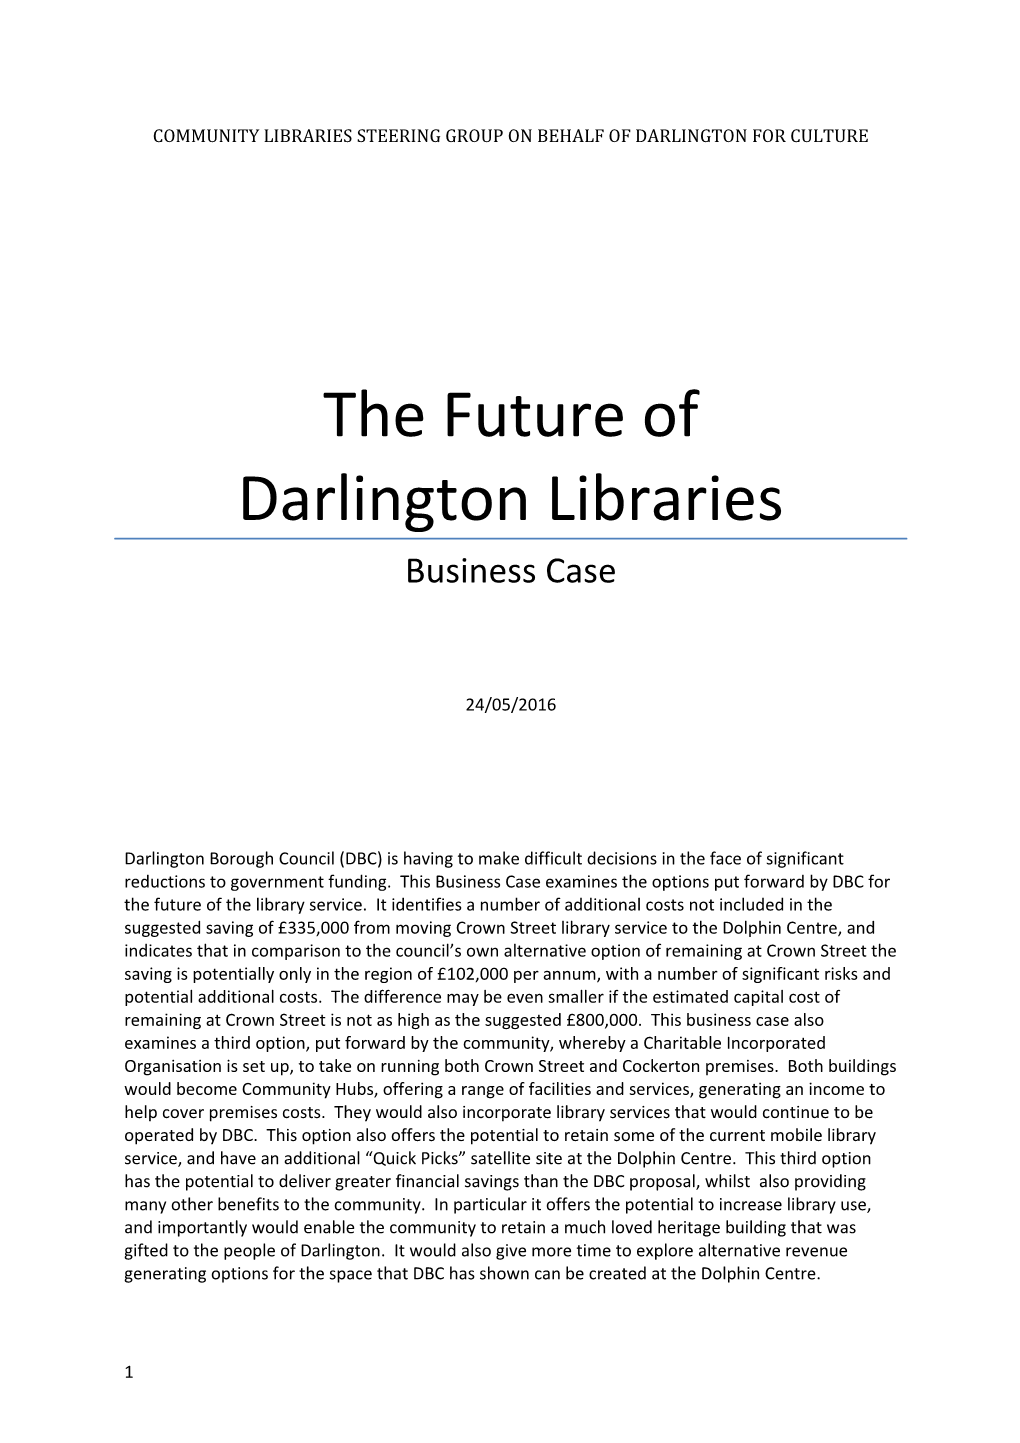 The Future of Darlington Libraries